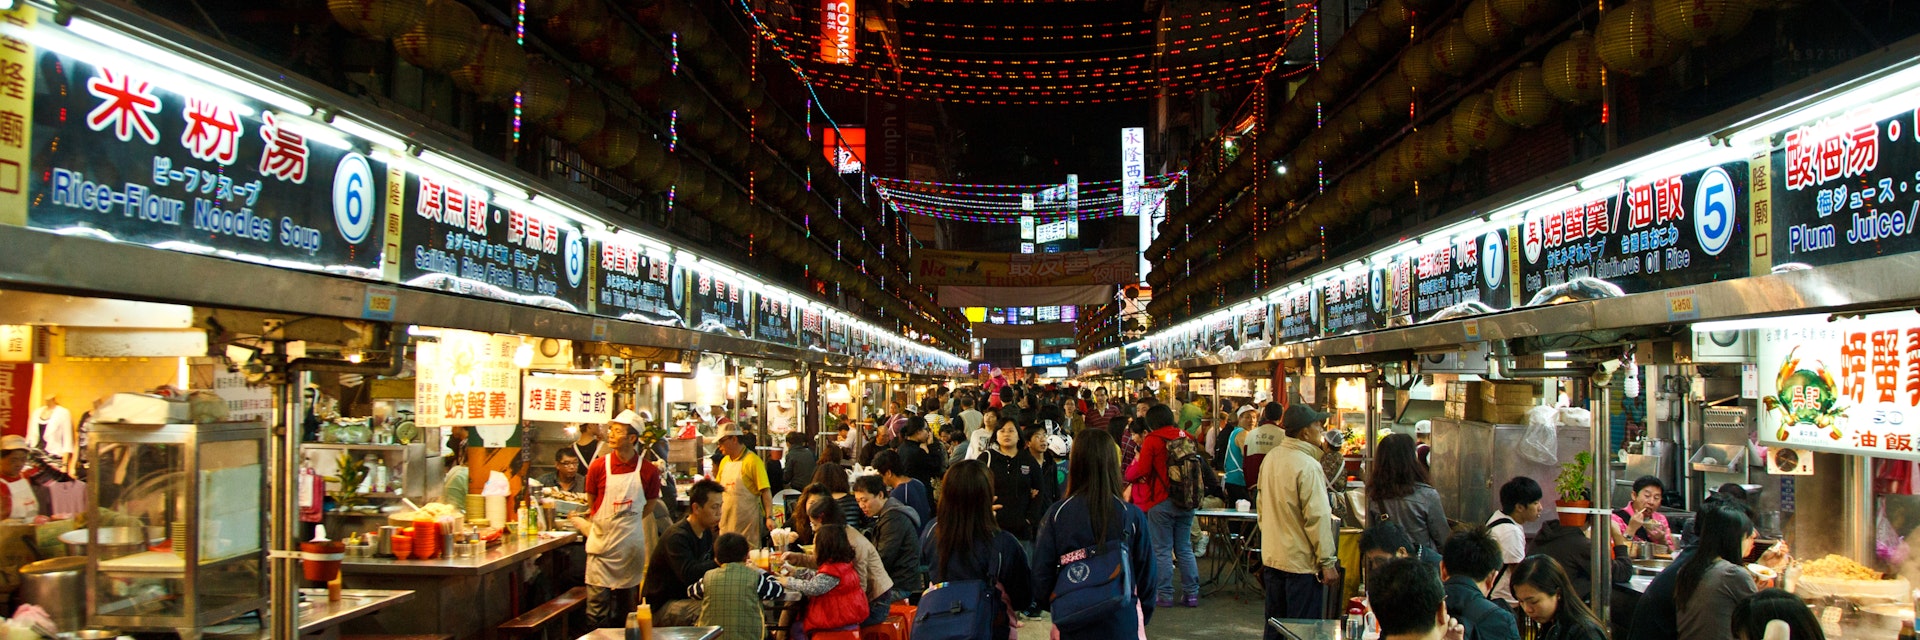 Keelung Miaokou night market